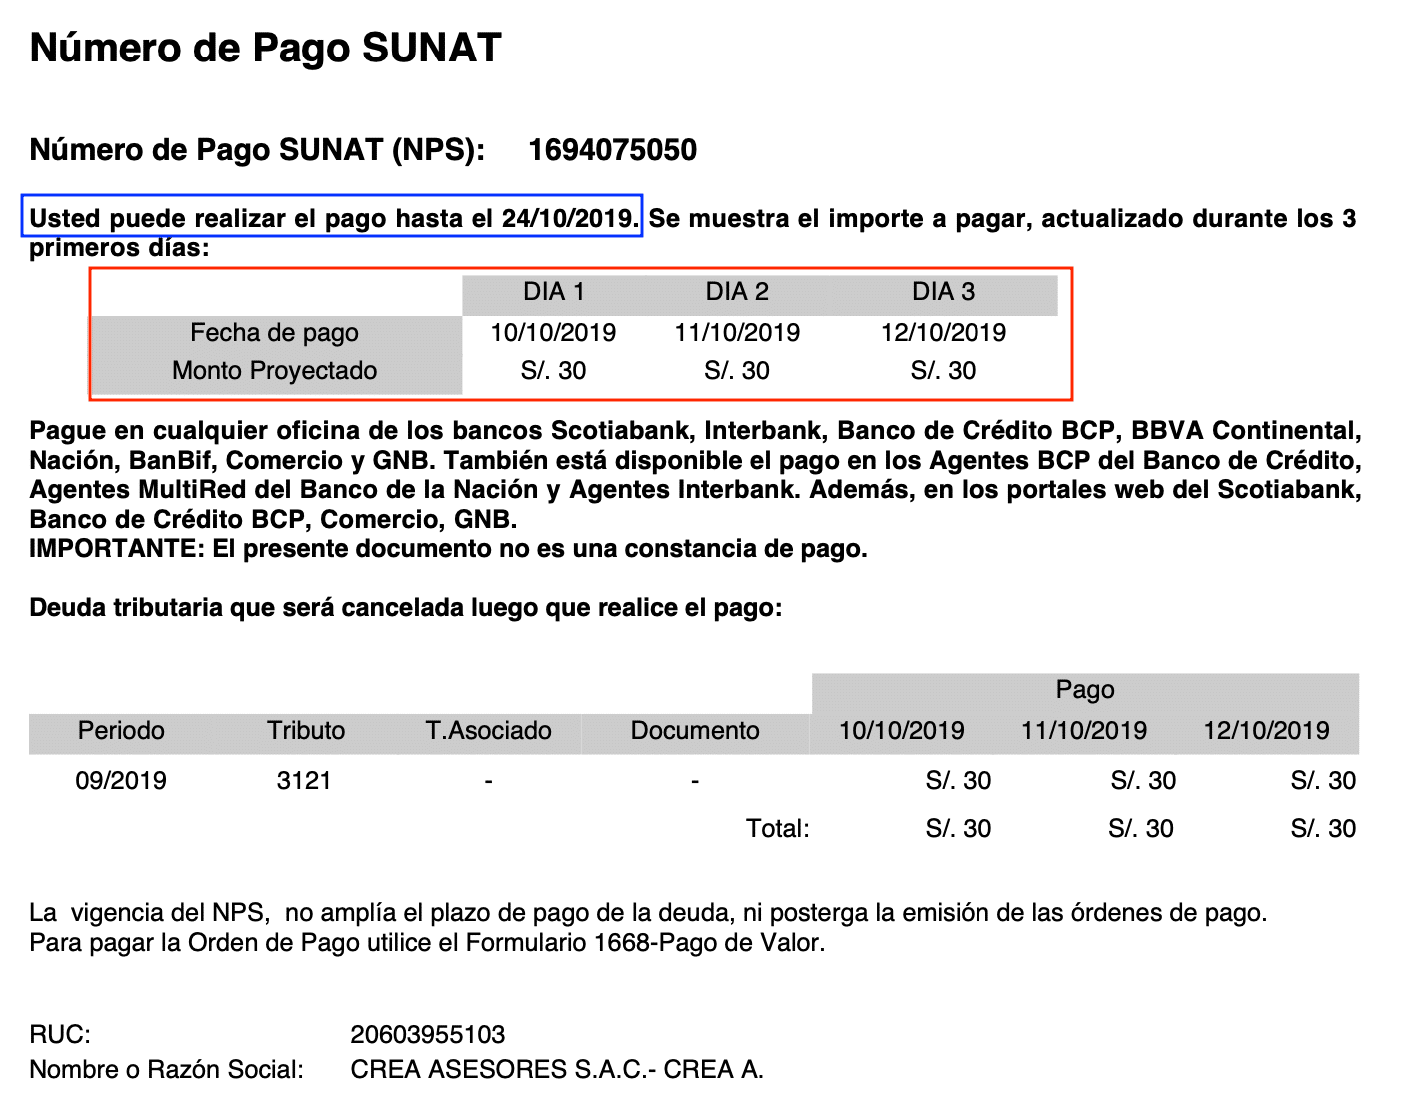 NPS SUNAT NUMERO DE PAGO SUNAT